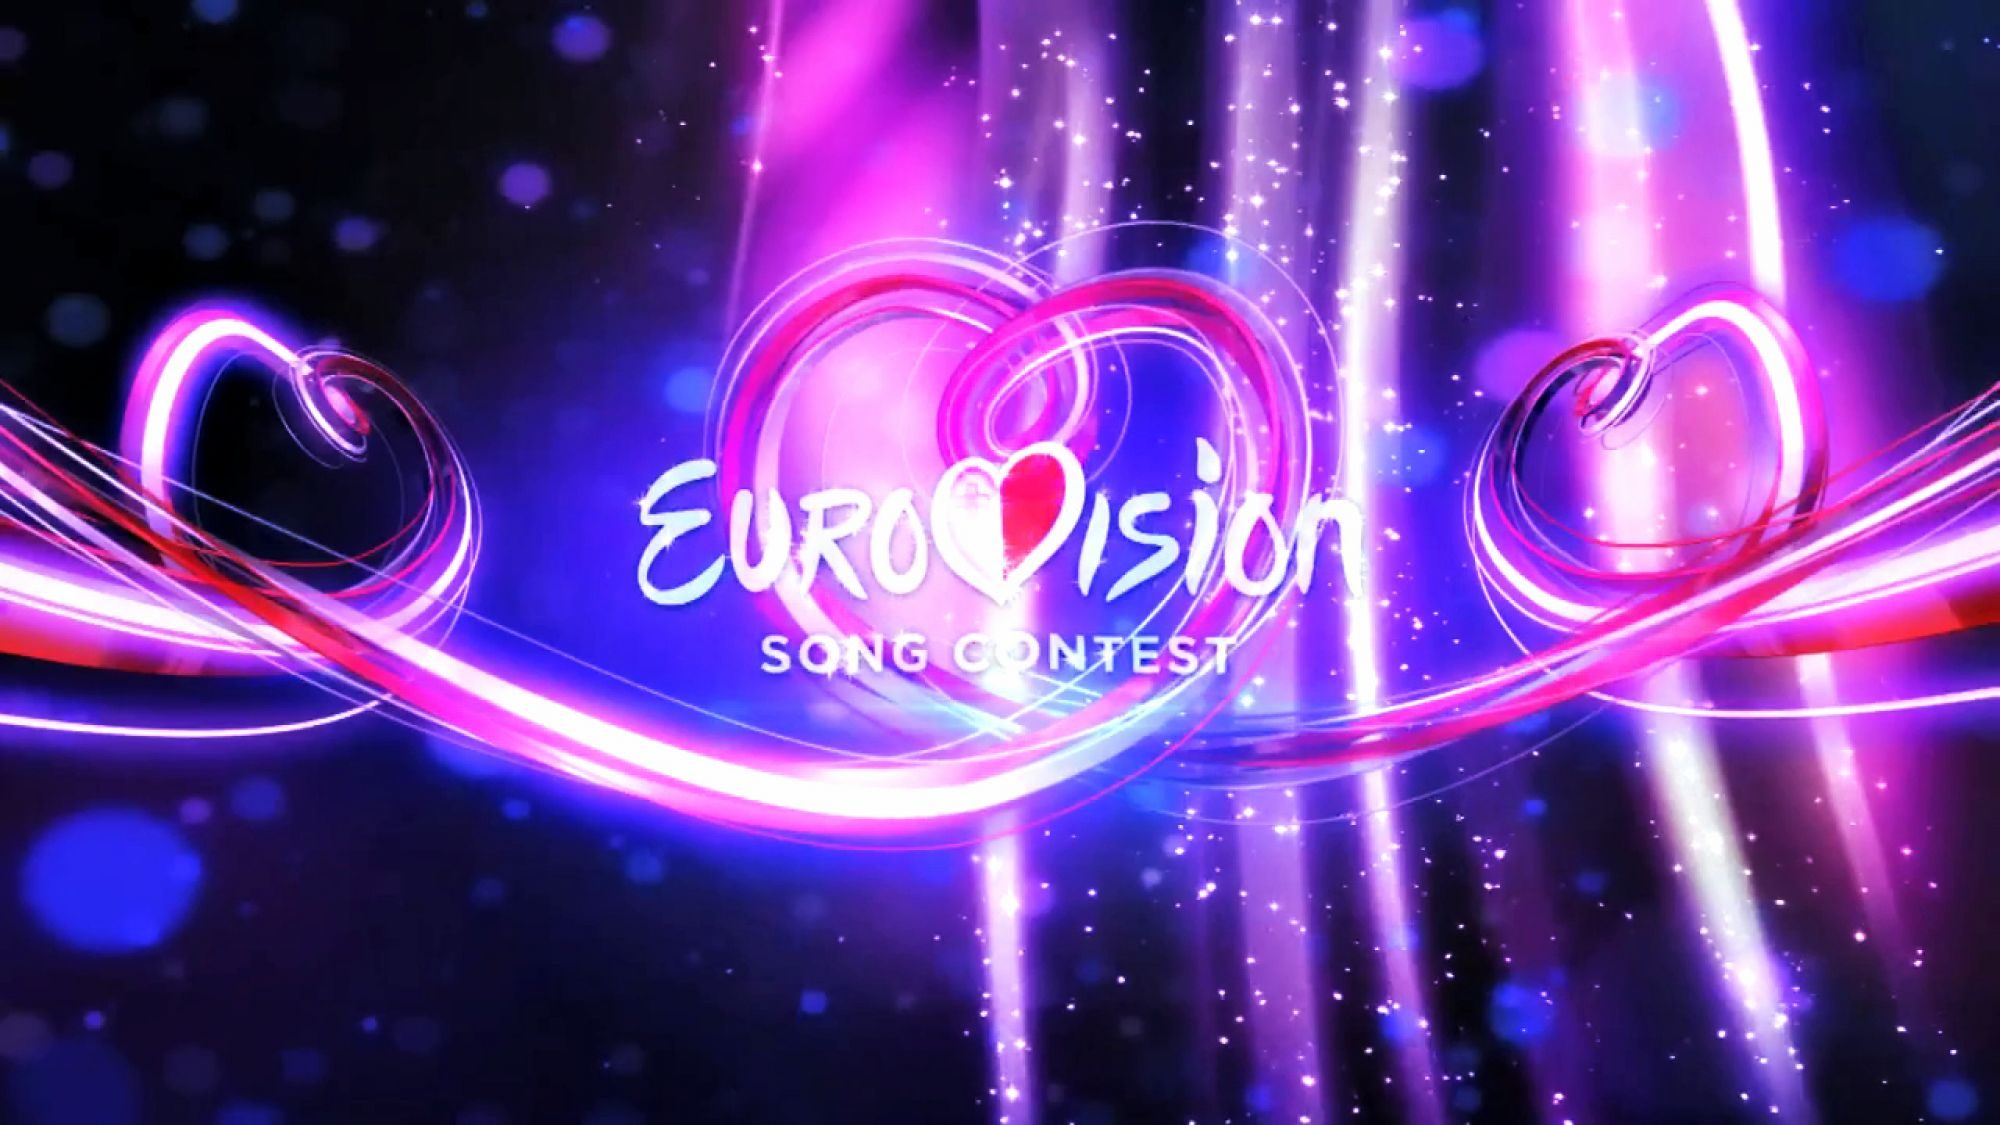 26012017_060431_malta-eurovision-2016-eurovision-com-cy_grande